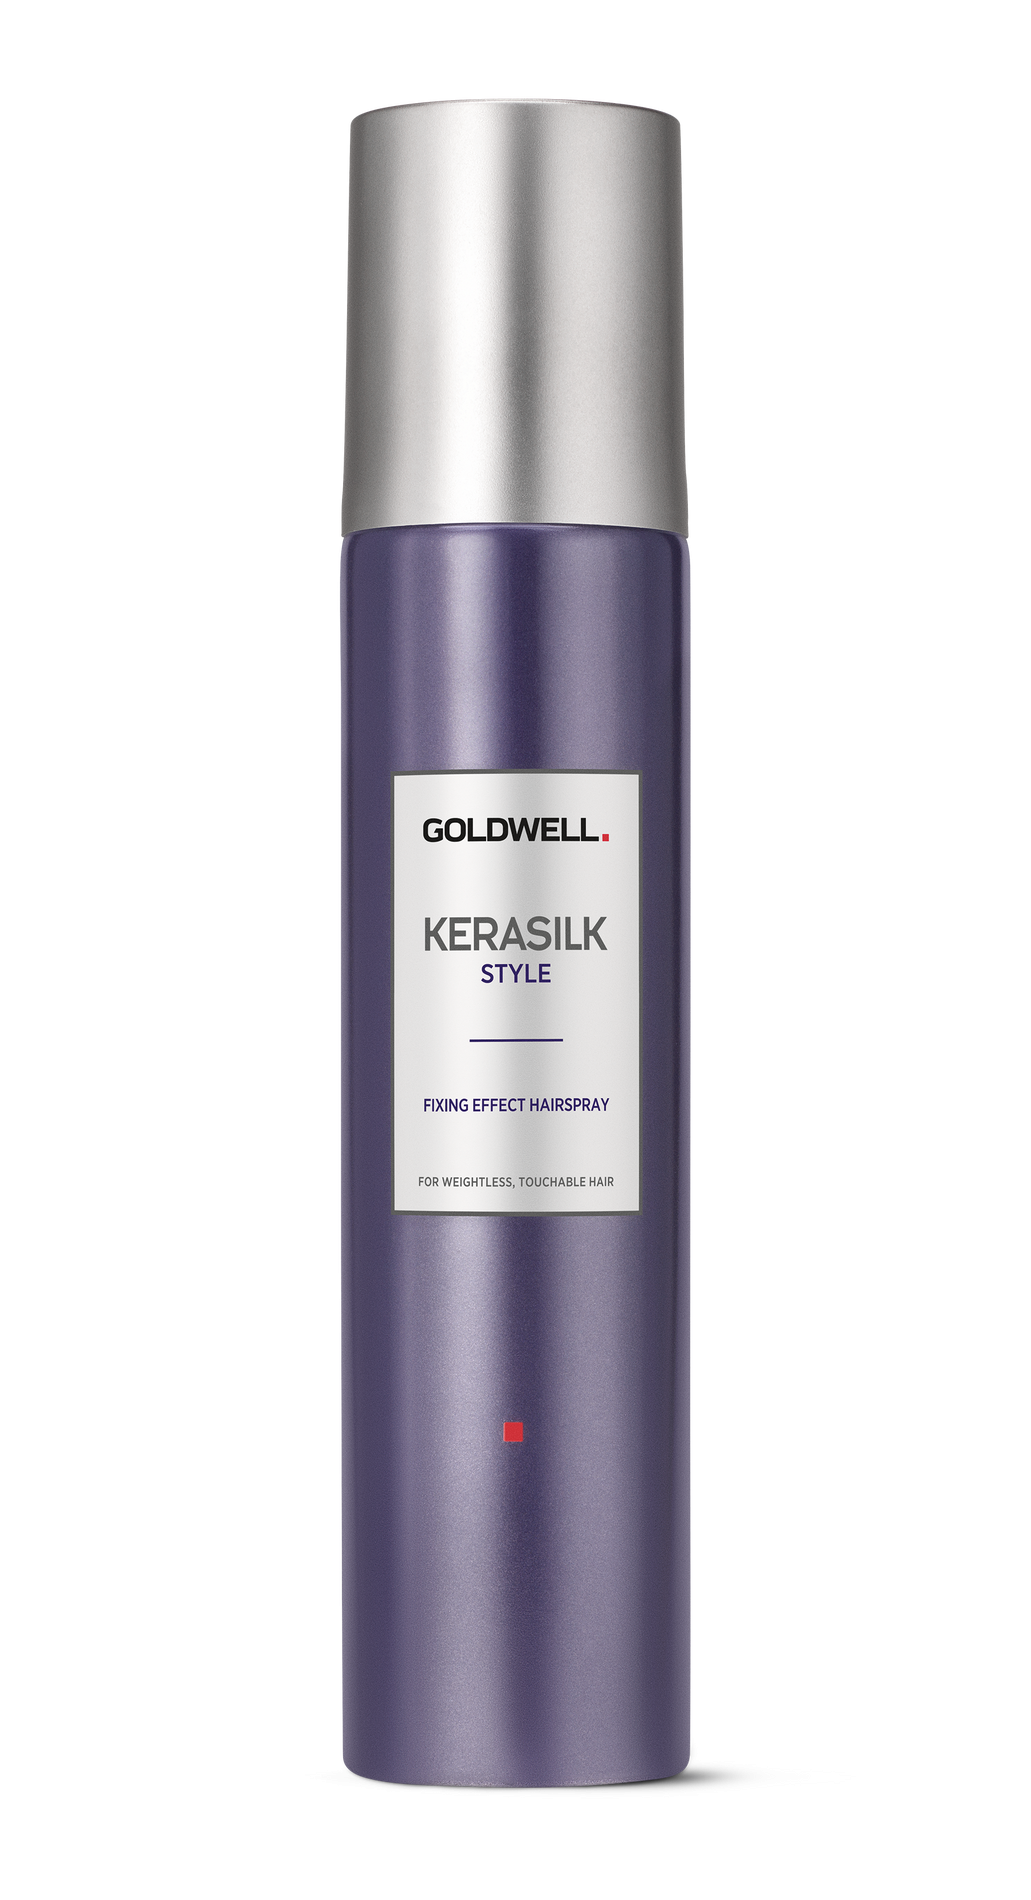 Goldwell Kerasilk Style Fixing Effect Hairspray 300 ml.